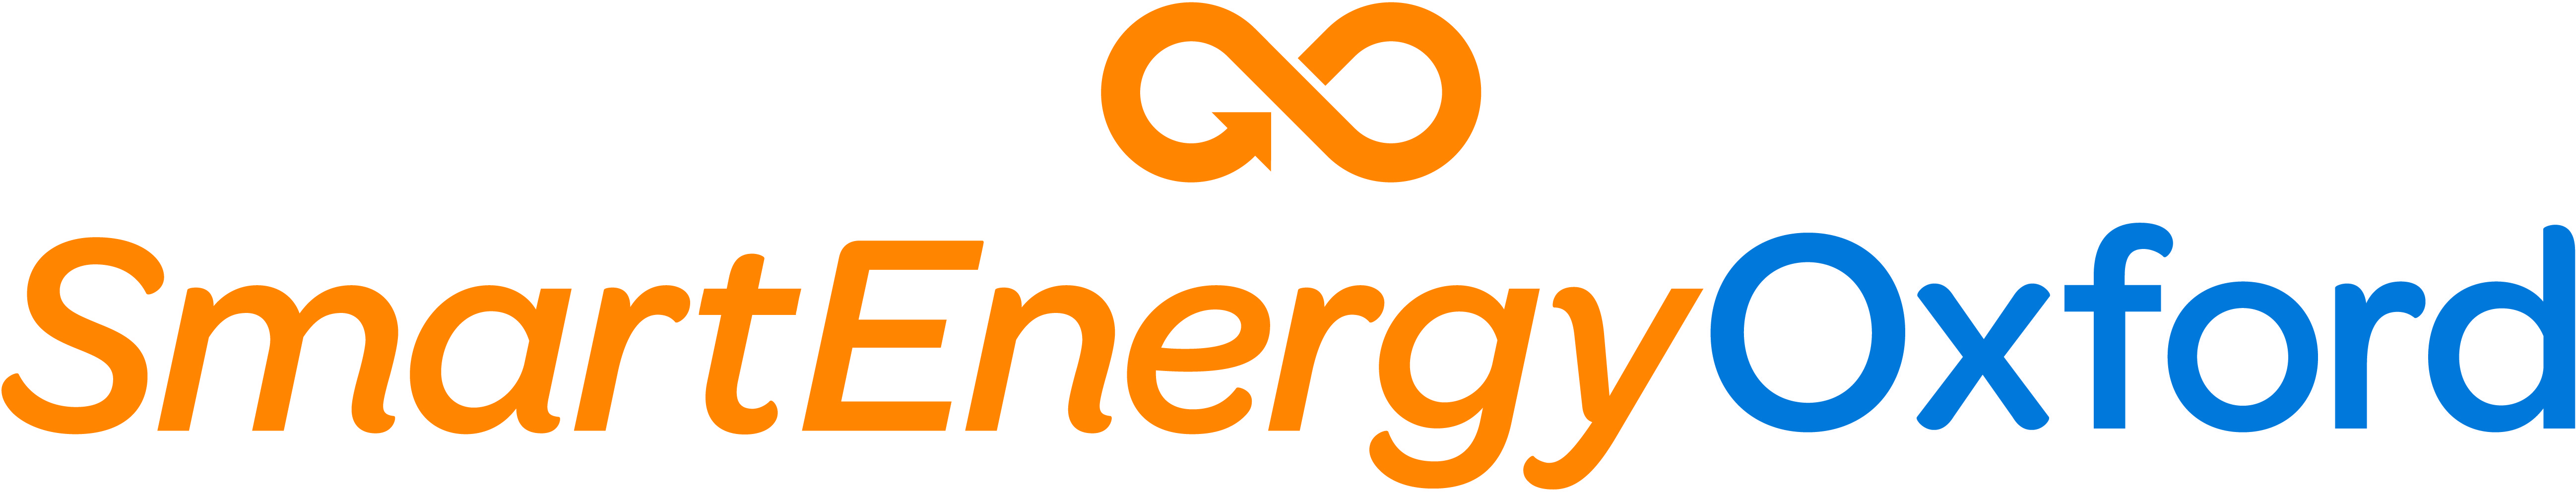 Smart Energy Oxford logo